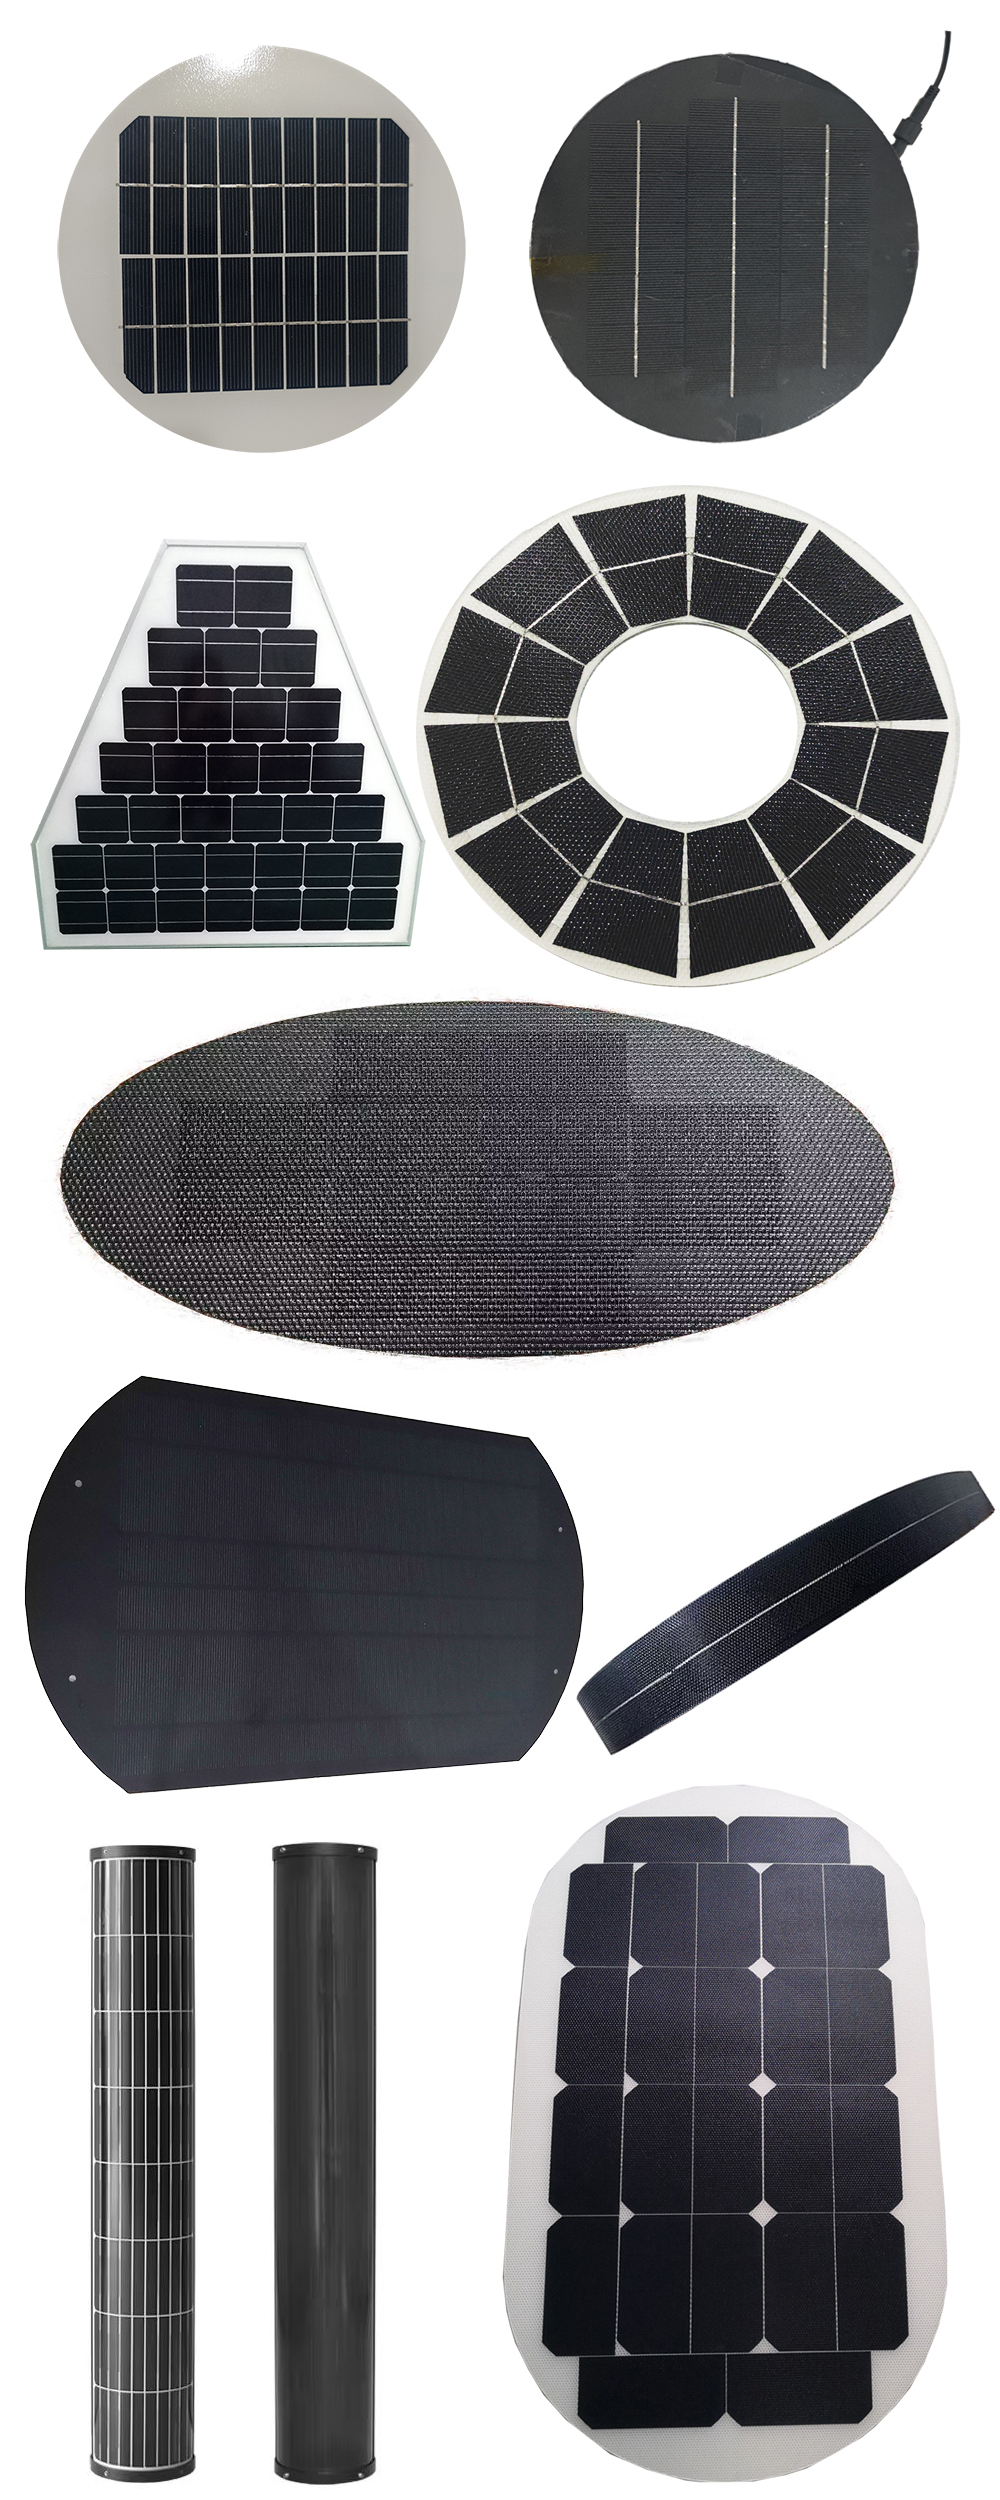 some irregular solar panel examples